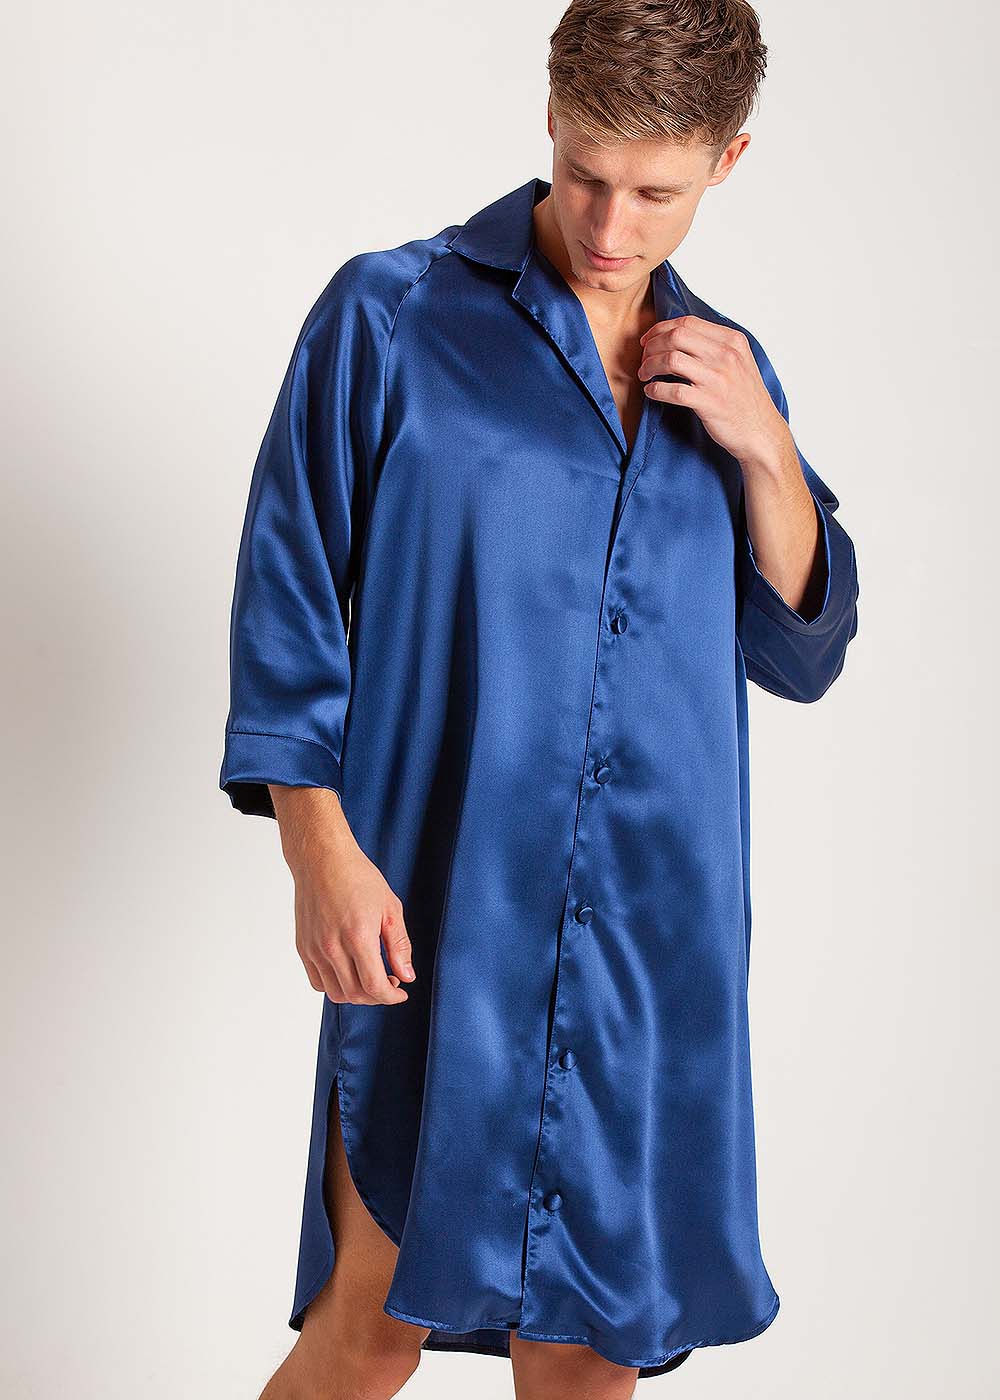 Navy silk nightshirt